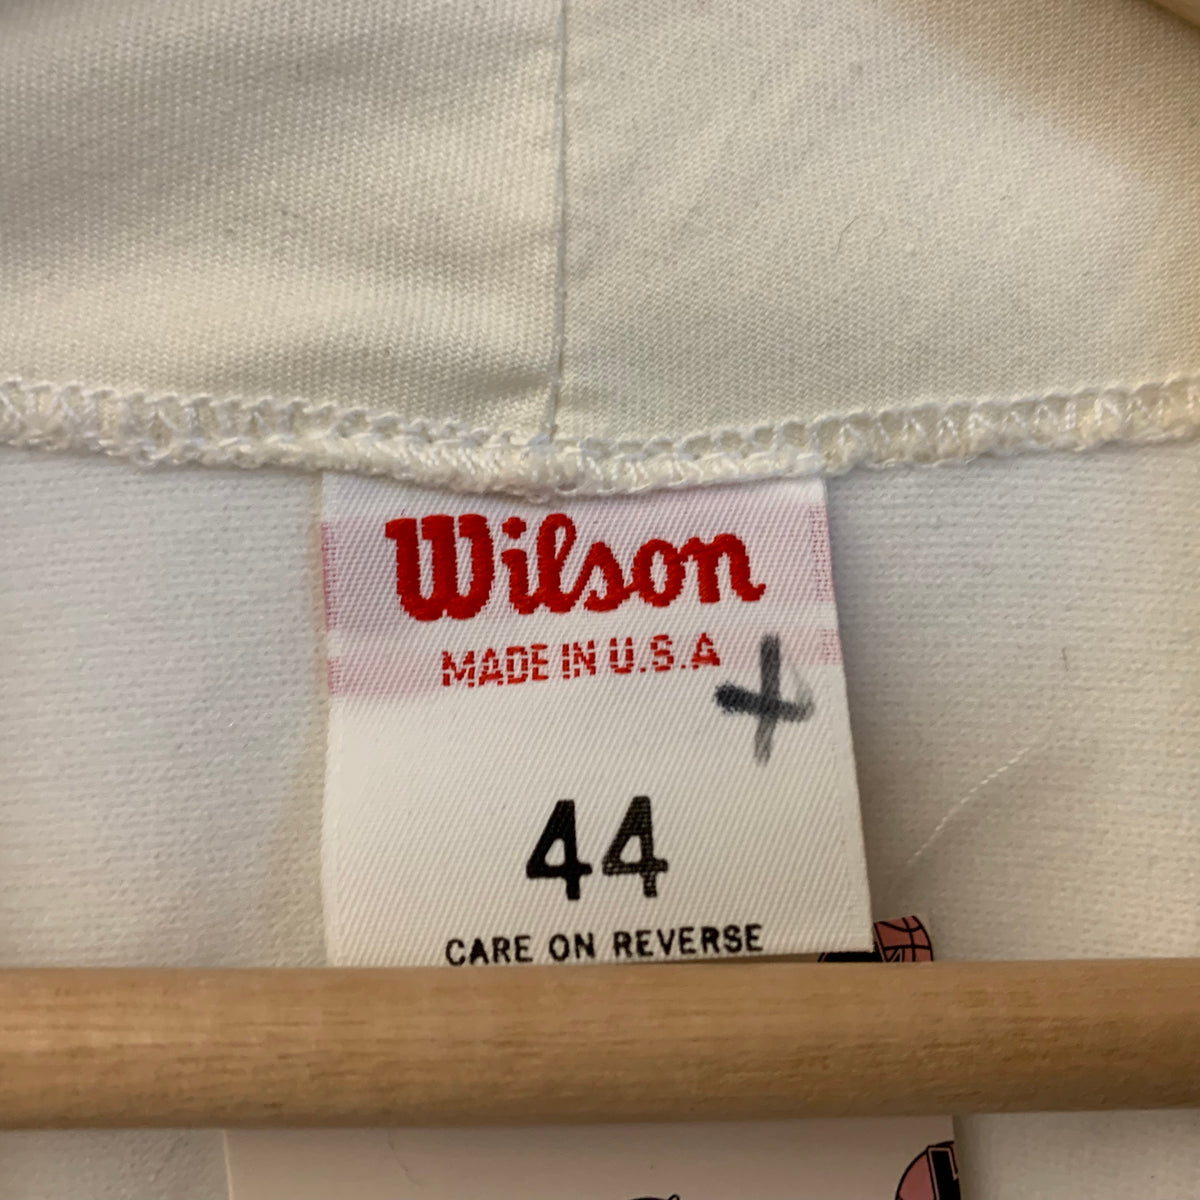 New York Yankees Vintage Wilson Authentic Baseball Jersey 42 